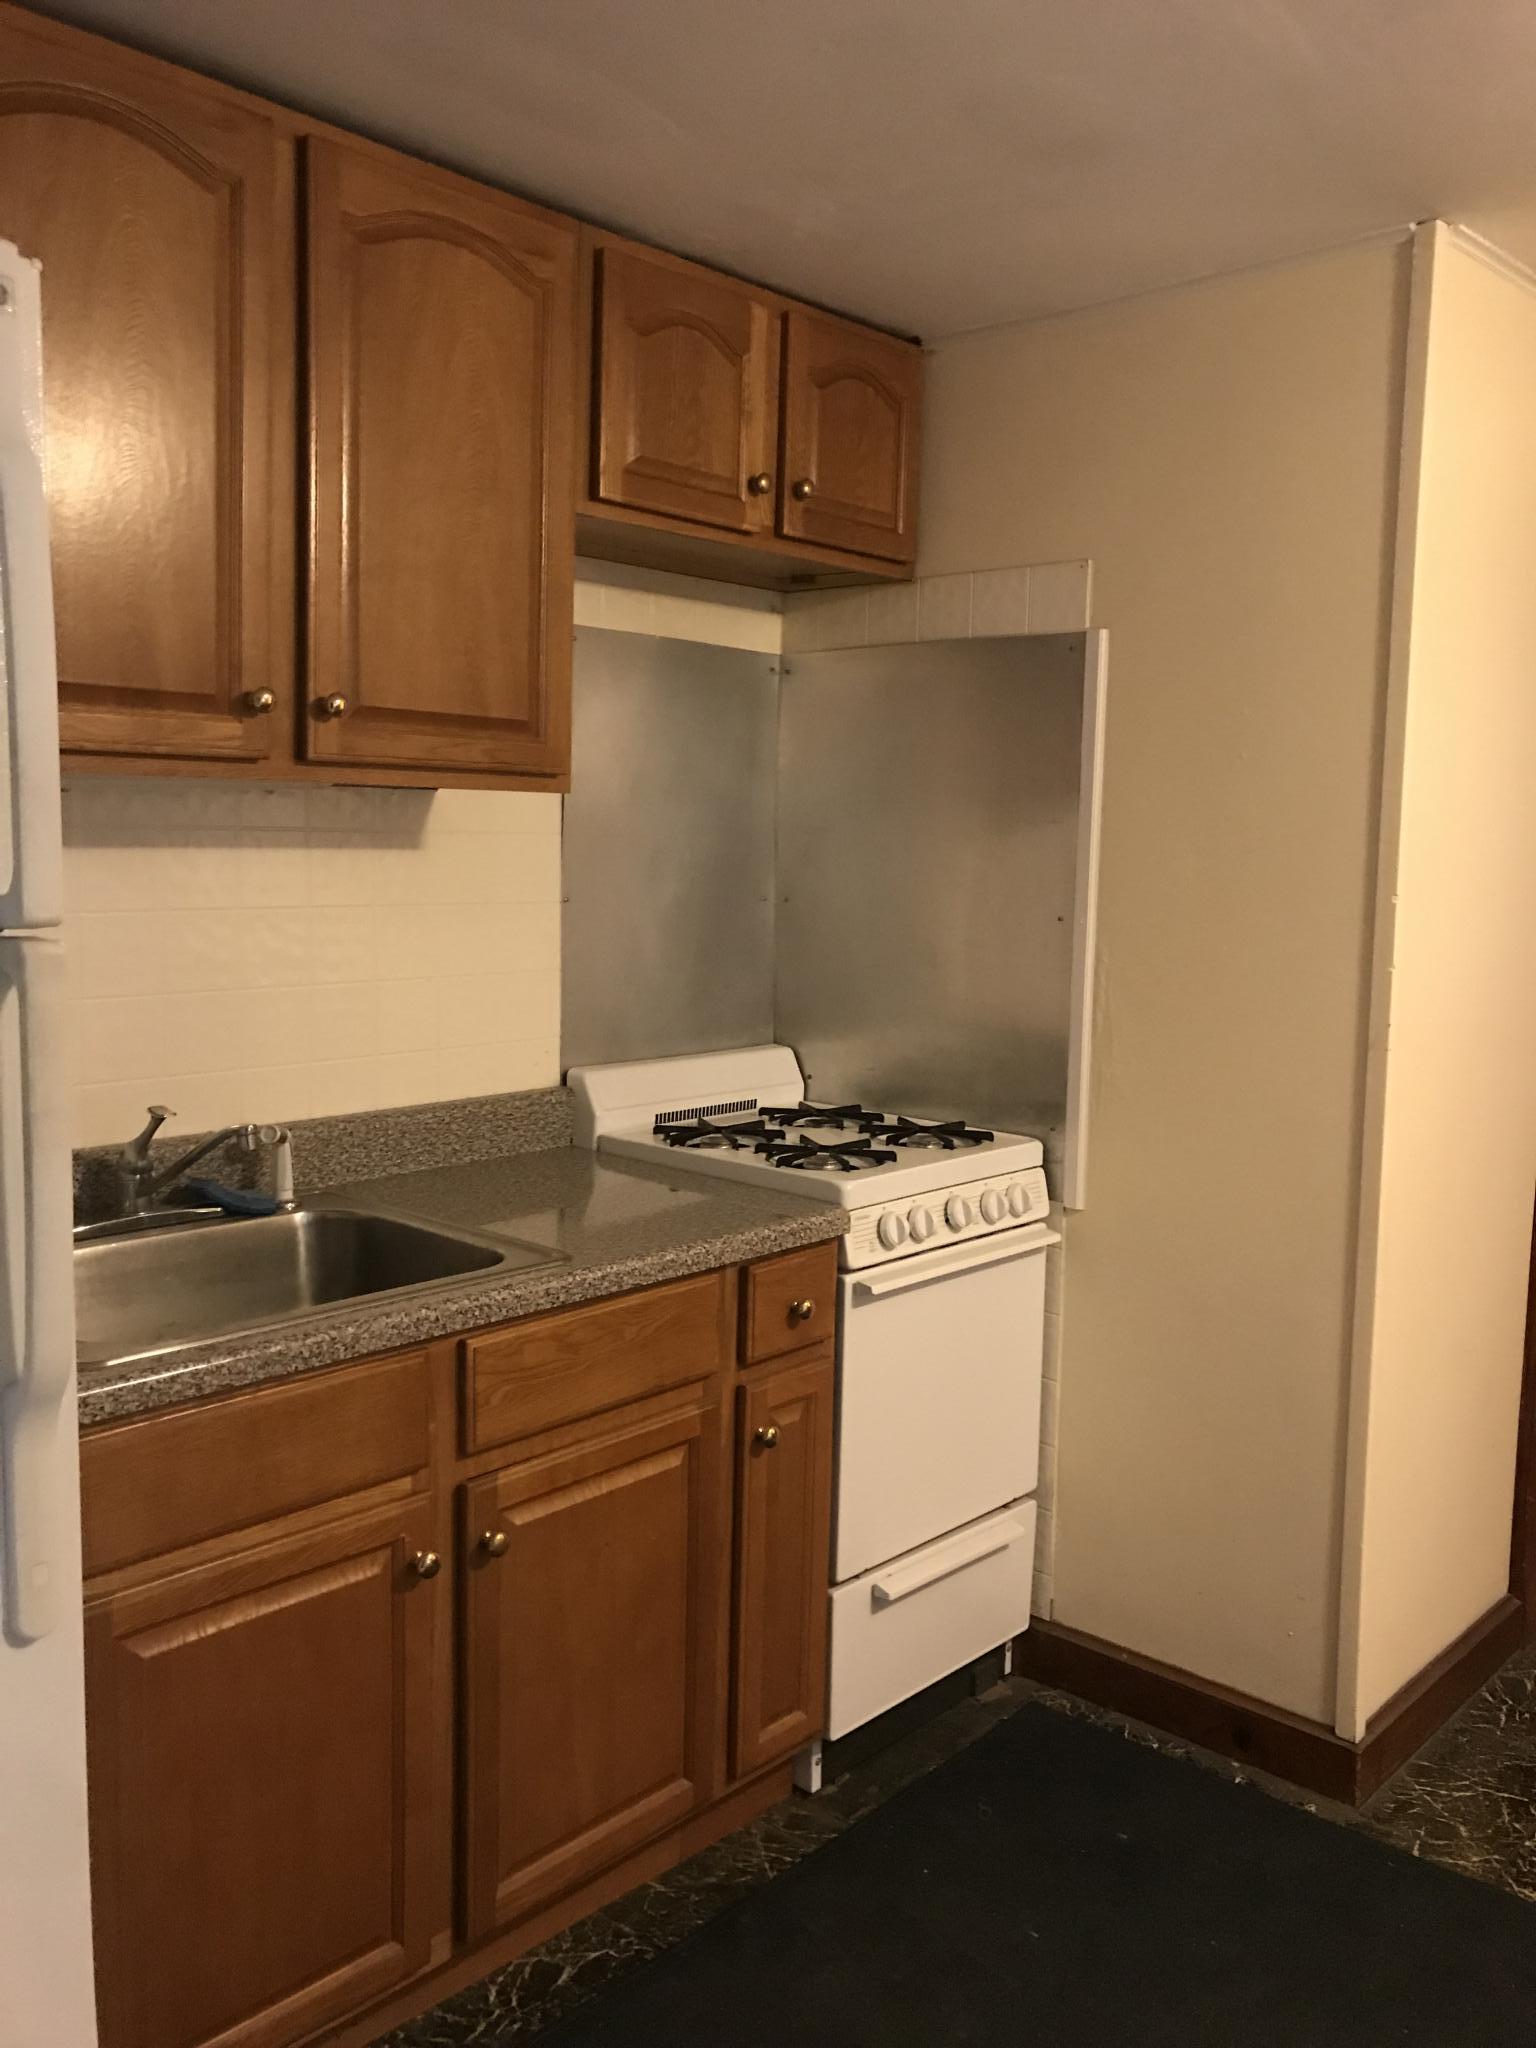 Photos of apartment on Nonantum St.,Boston MA 02135